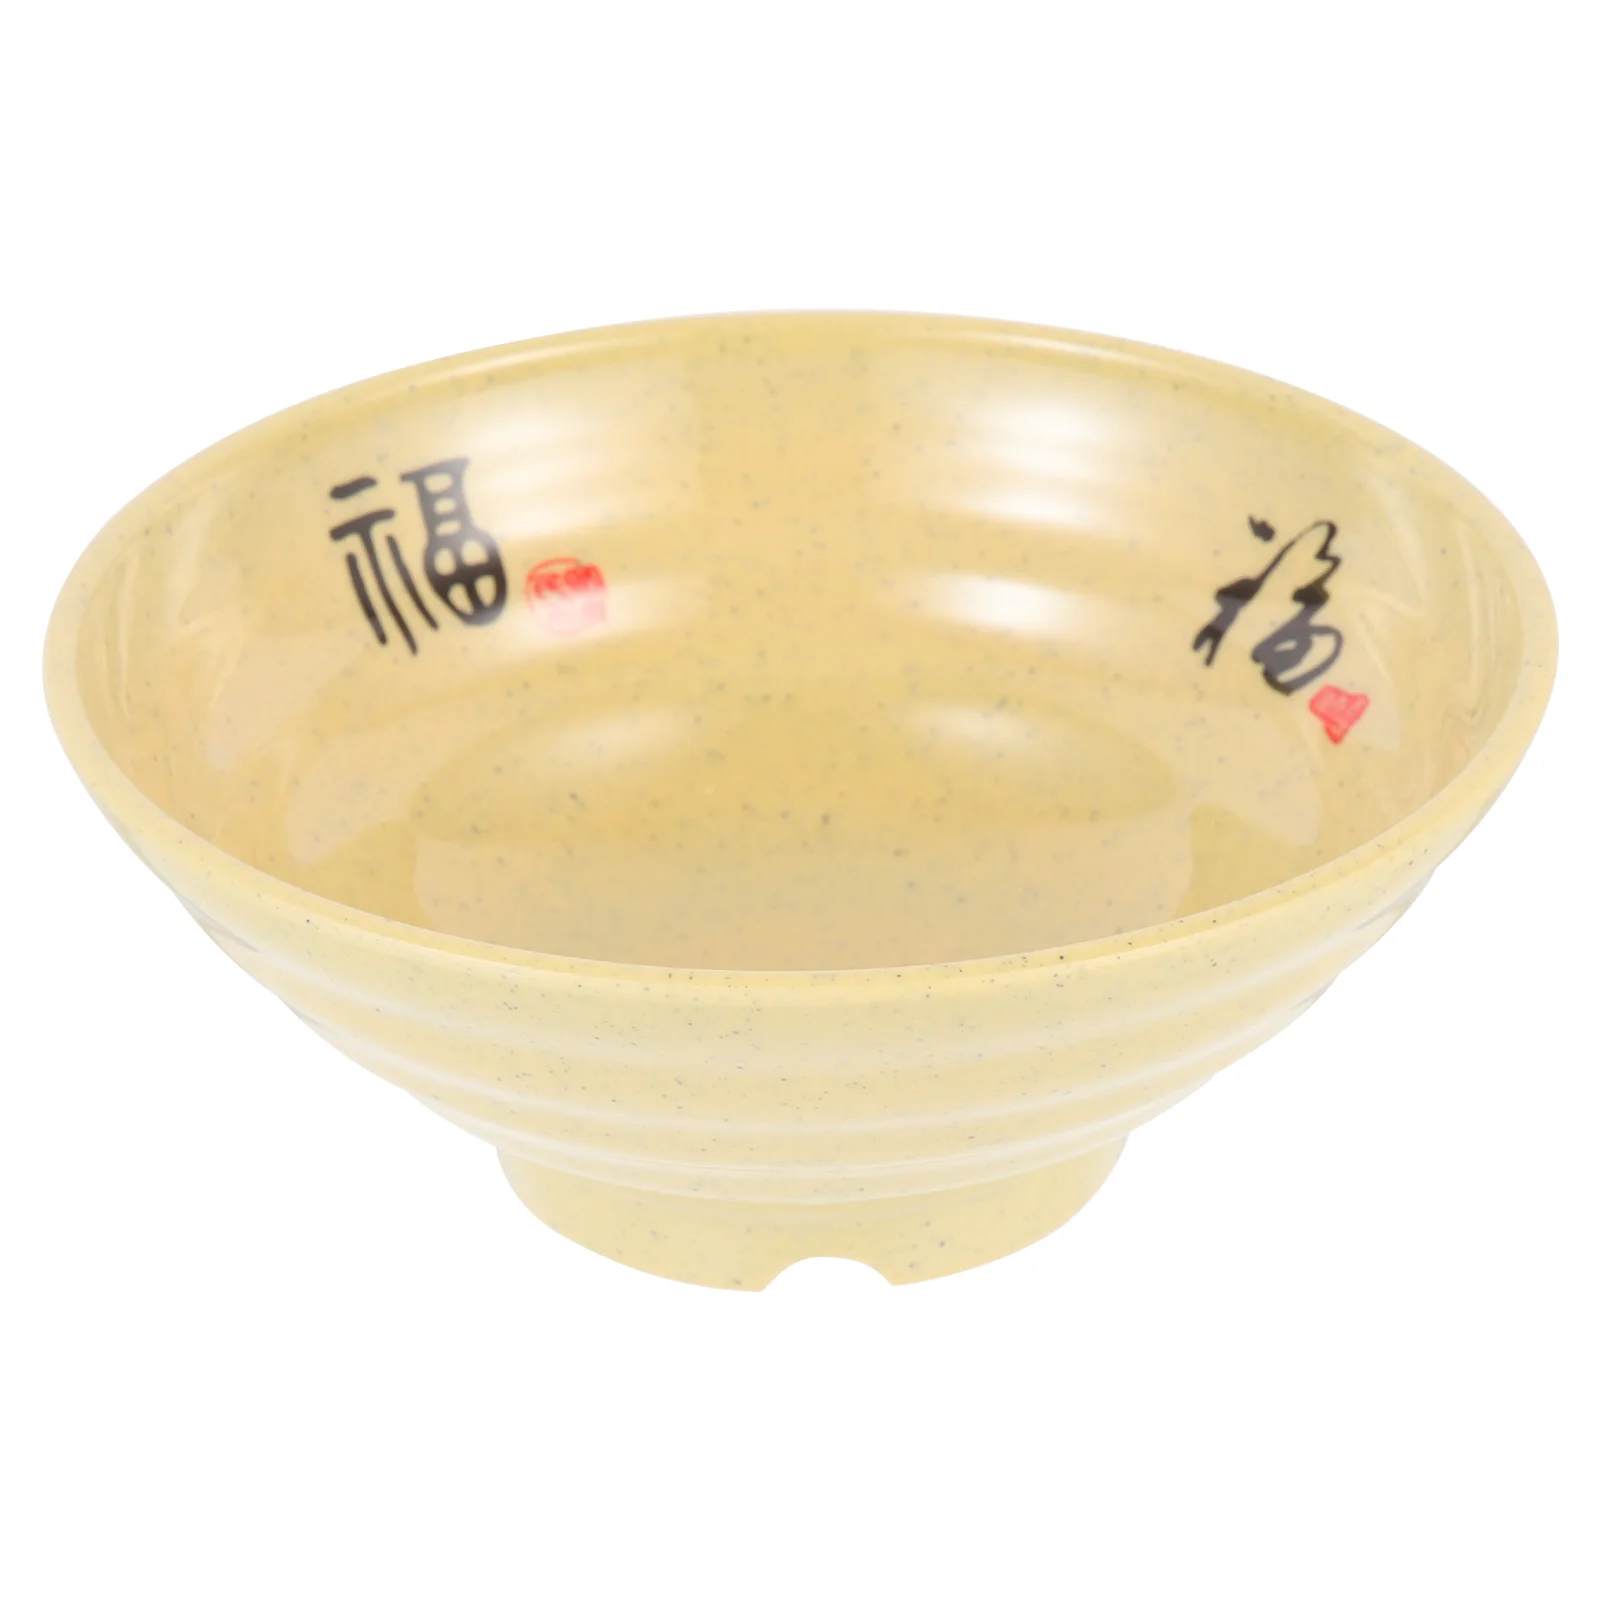 

Bowl Bowls Japanese Noodle Ramen Soup Melamine Cereal Salad Miso Mixing Rice Serving Pho Udon Instant Pasta Large Asian Dessert